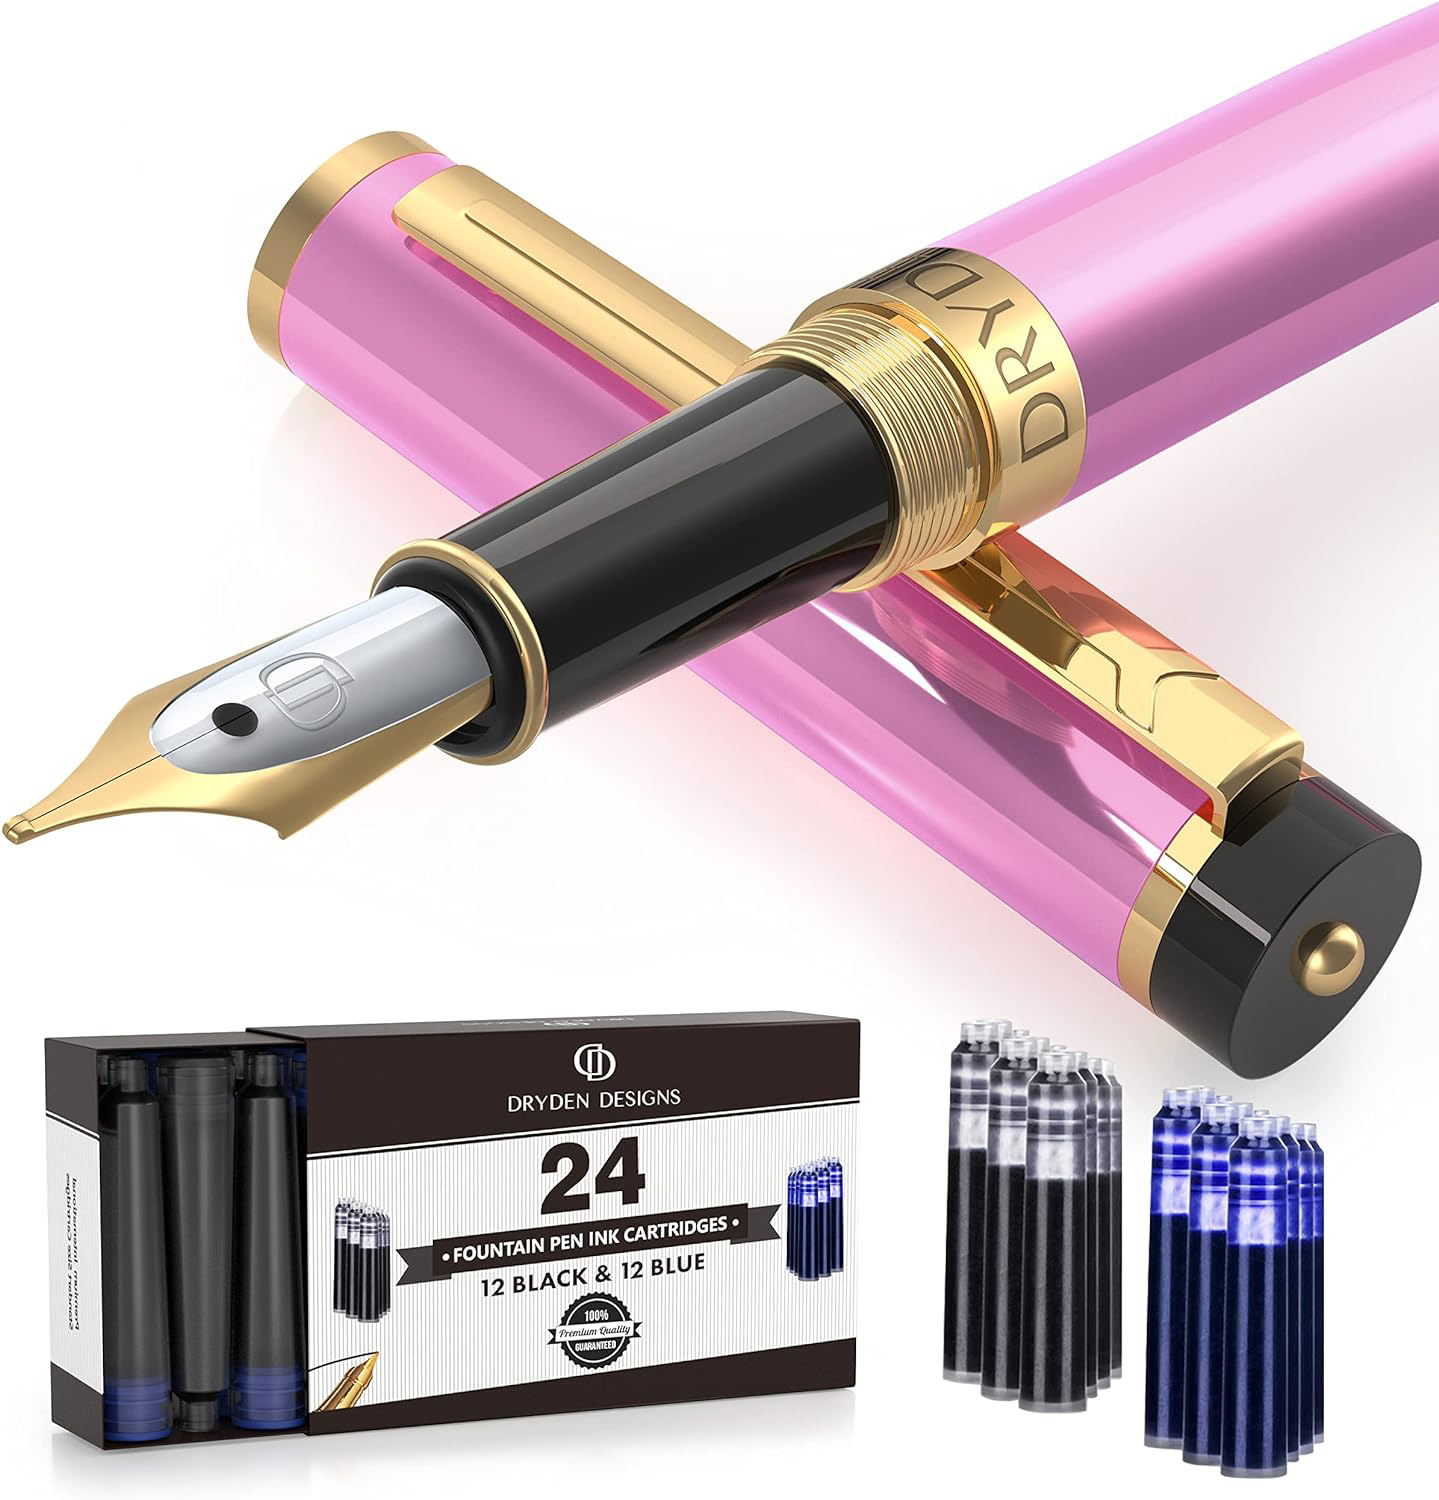 Dryden Designs Fountain Pen - Medium Nib 0.5mm | Includes 24 Ink Cartridges (12